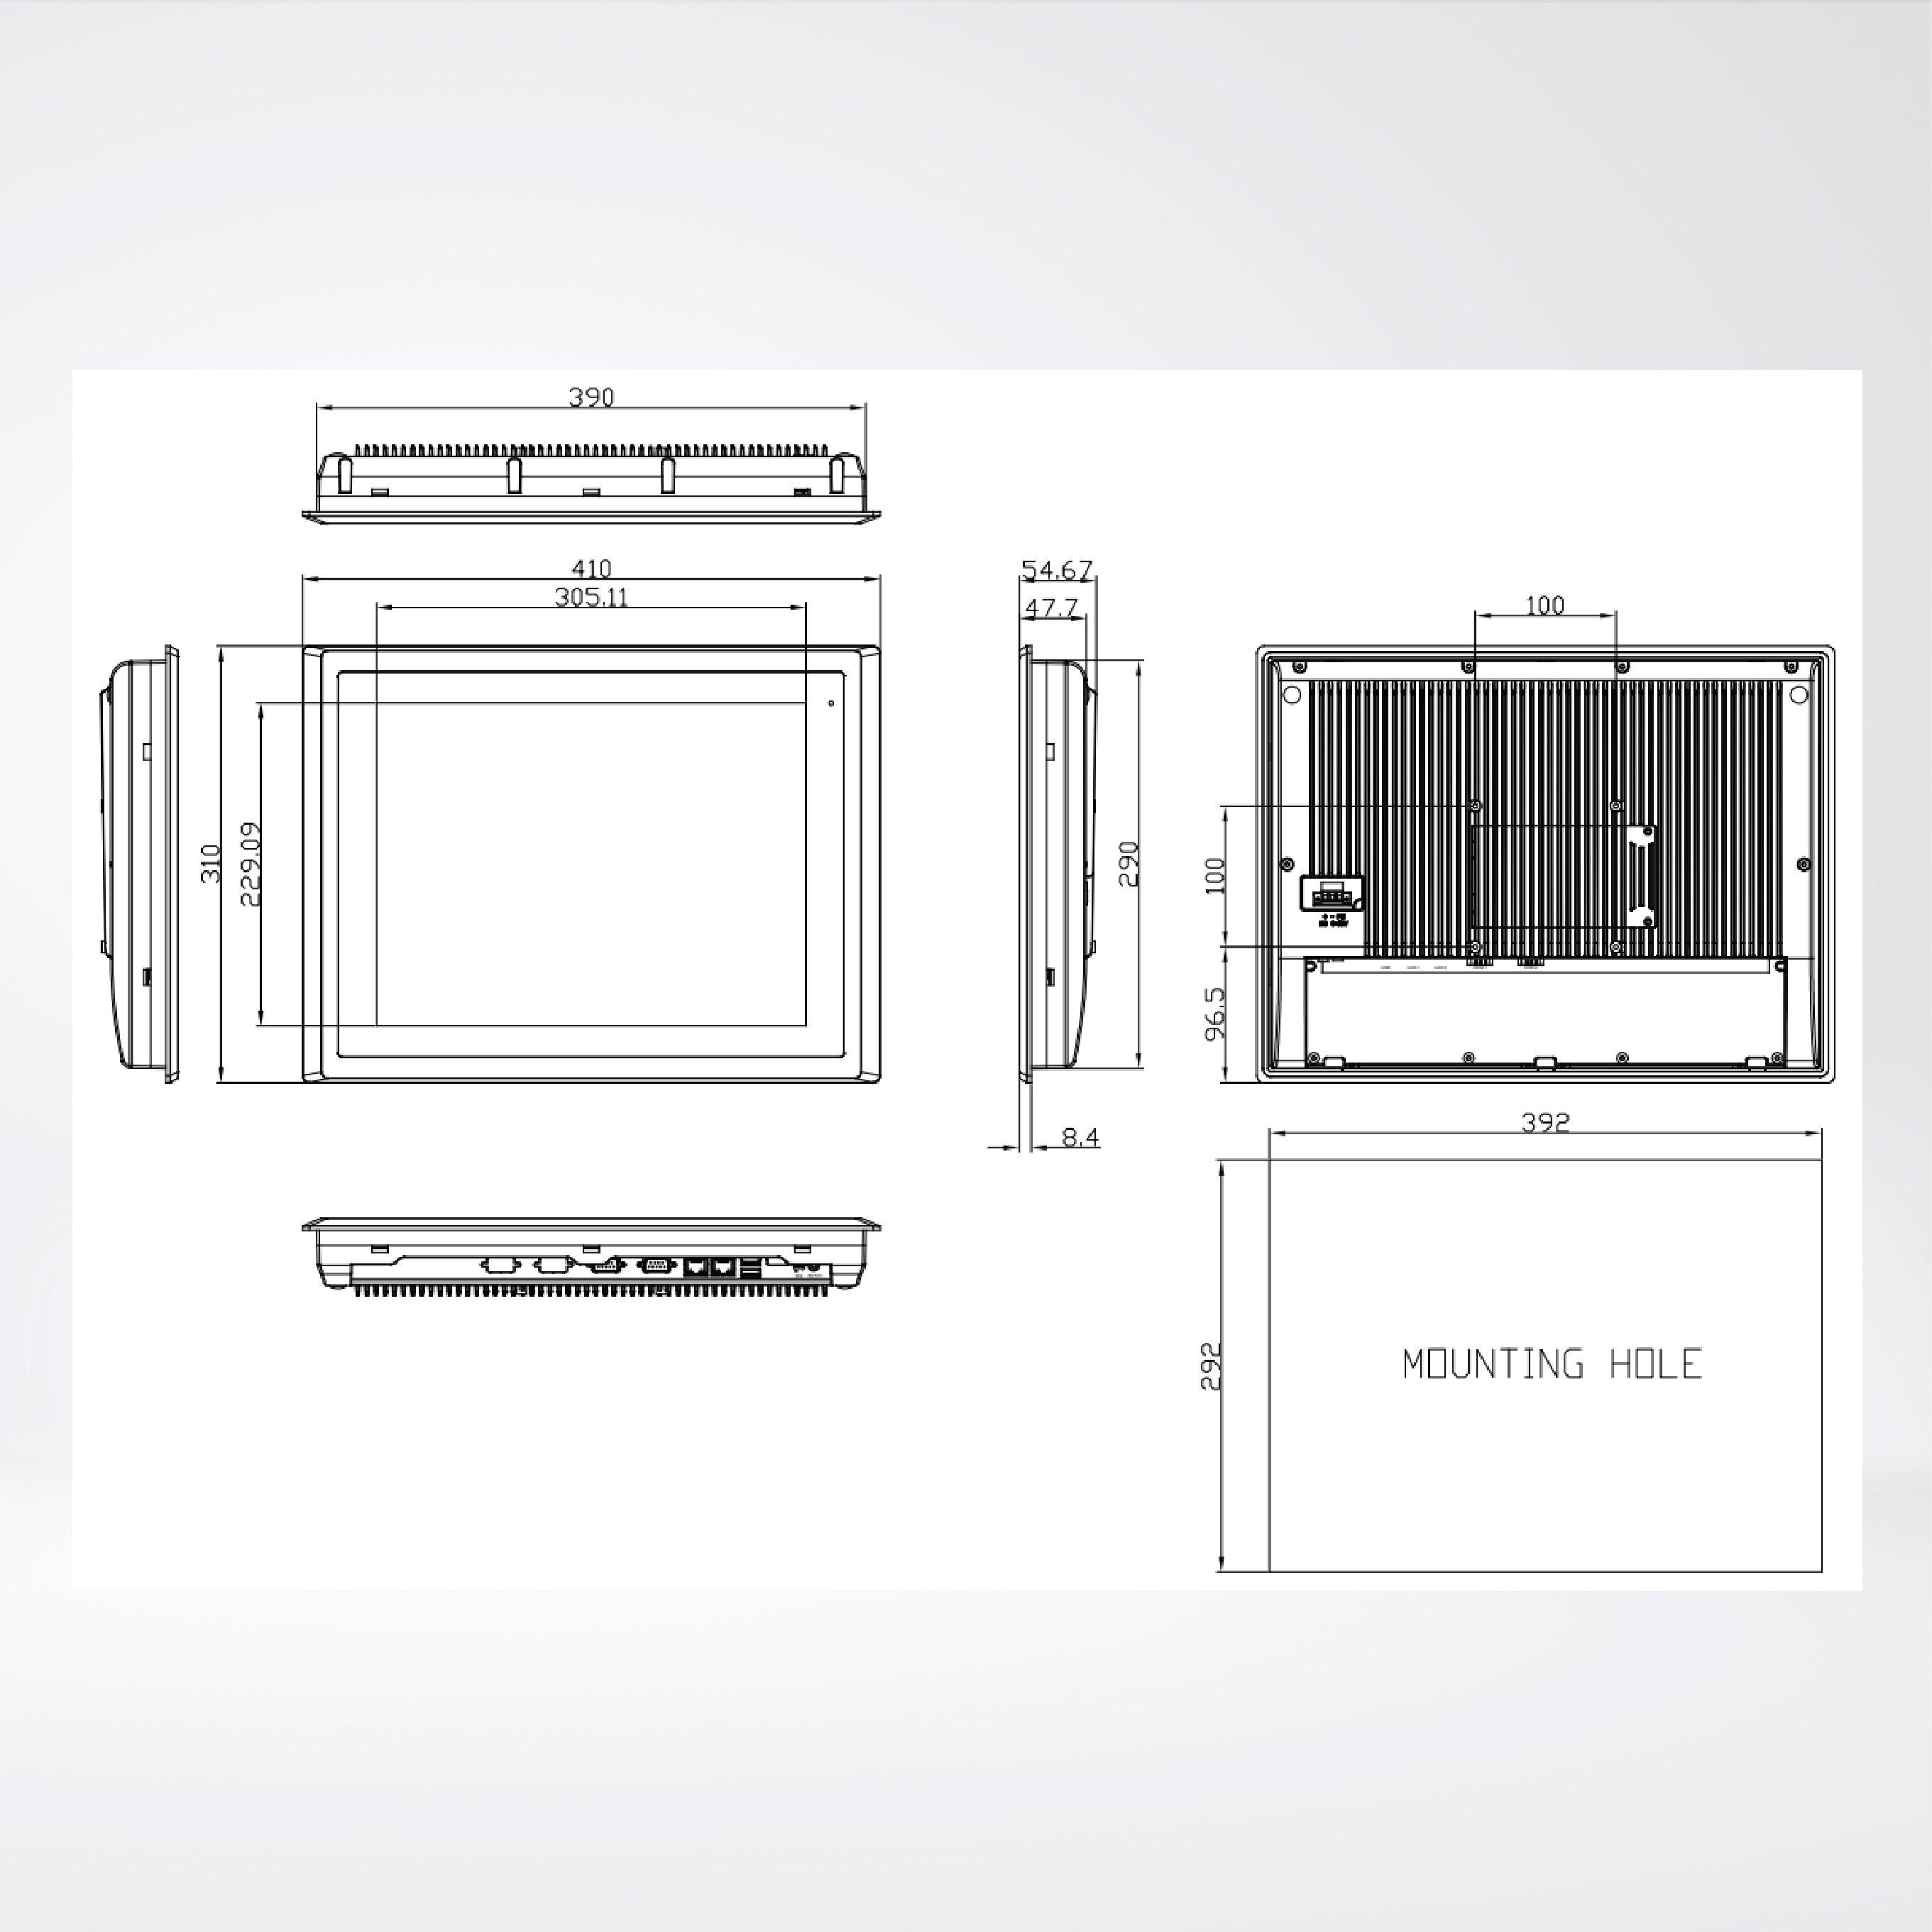 ARCHMI-815H 15" Intel Celeron N2930/ Atom E3845, Fanless Industrial Compact Size Panel PC - Riverplus